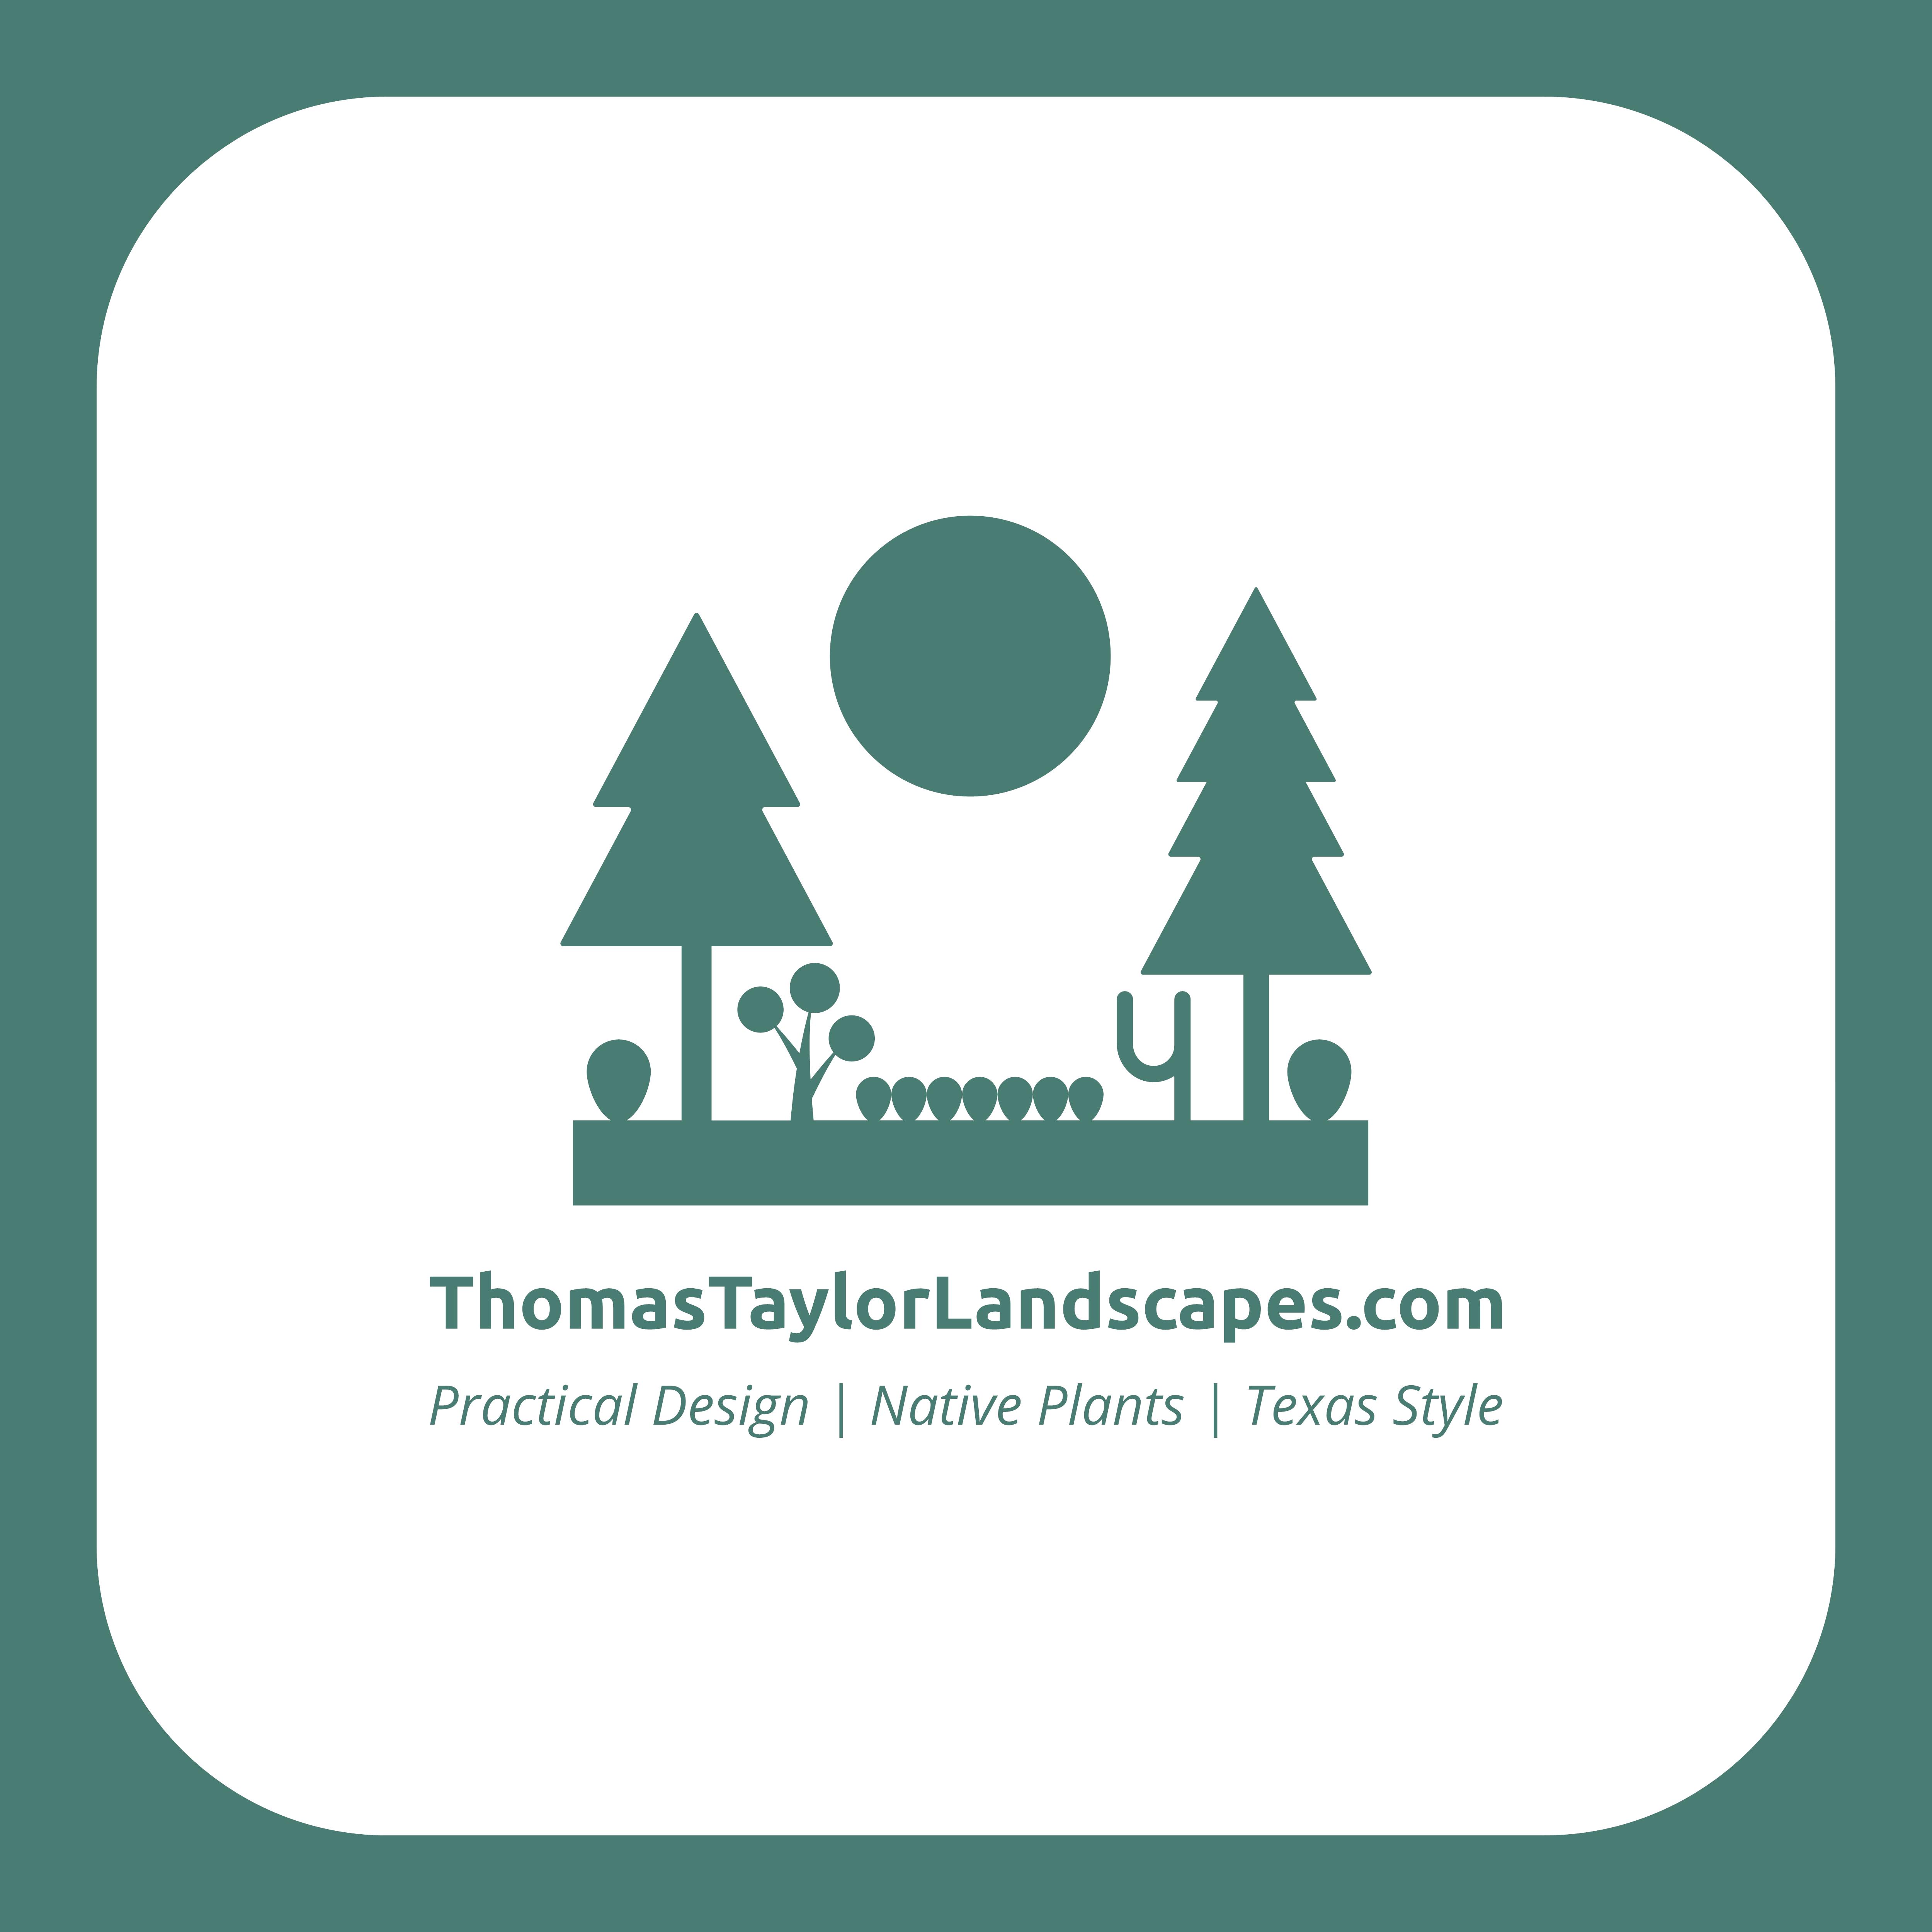 Thomas Taylor Landscapes